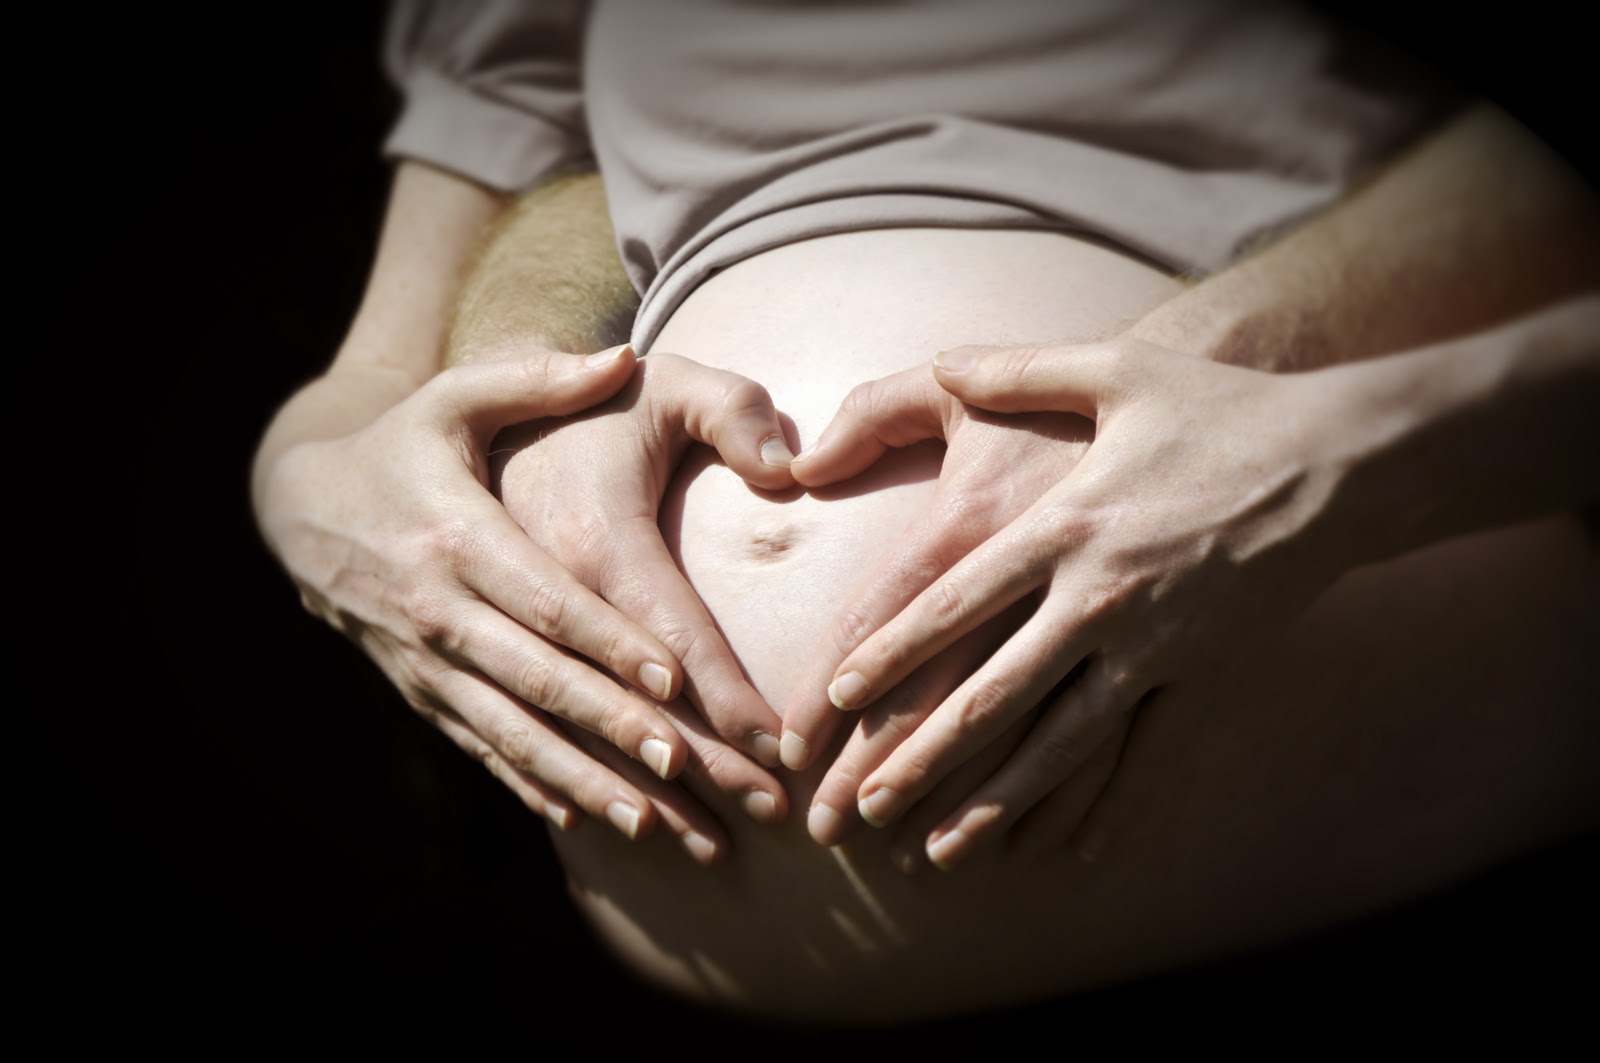 Detectores del latido fetal - La matrona responde